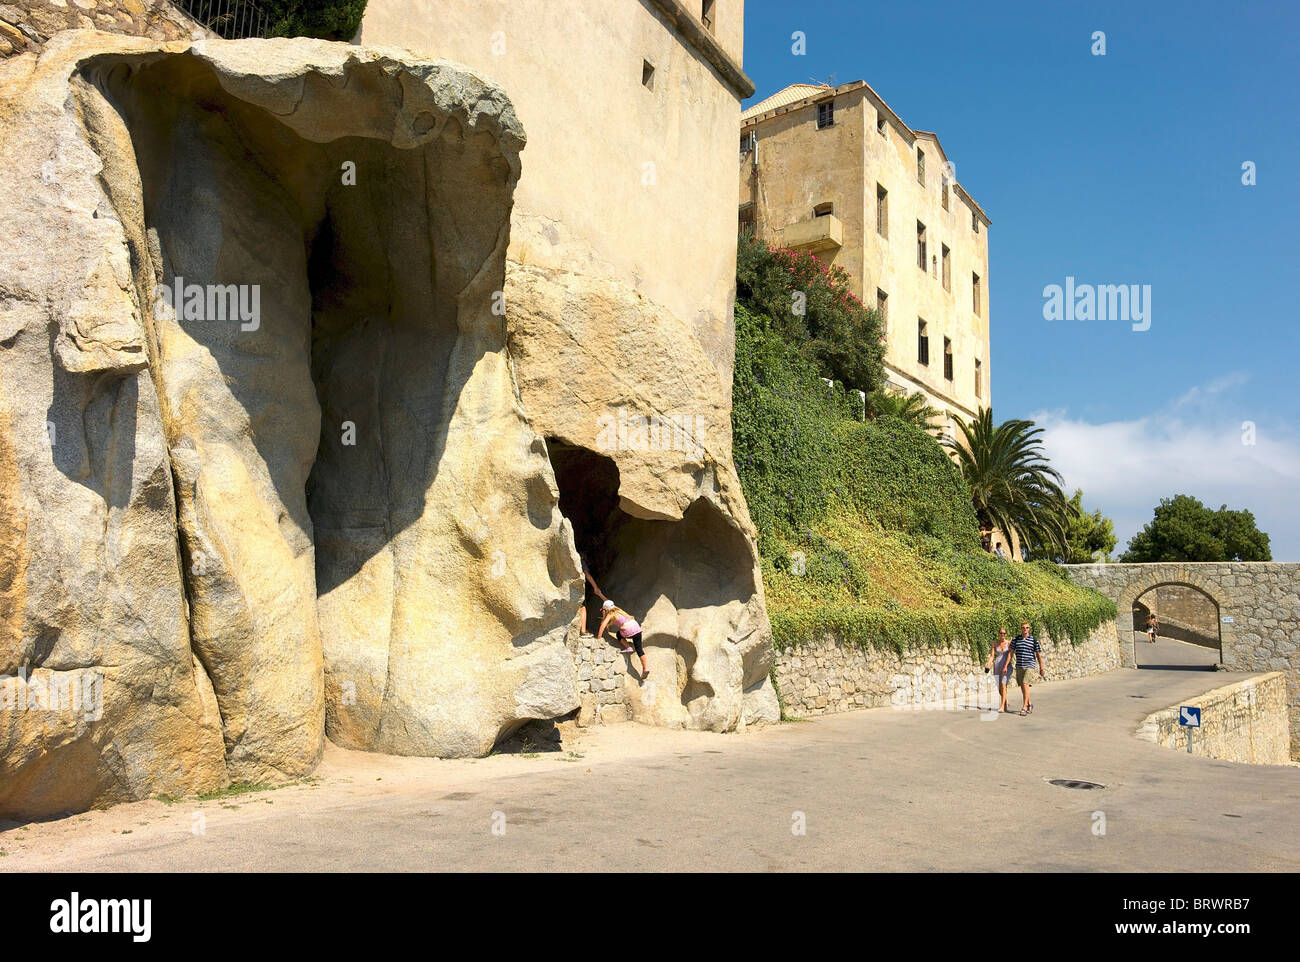 Natural caves in stone near the citadel in Calvi. Stock Photo